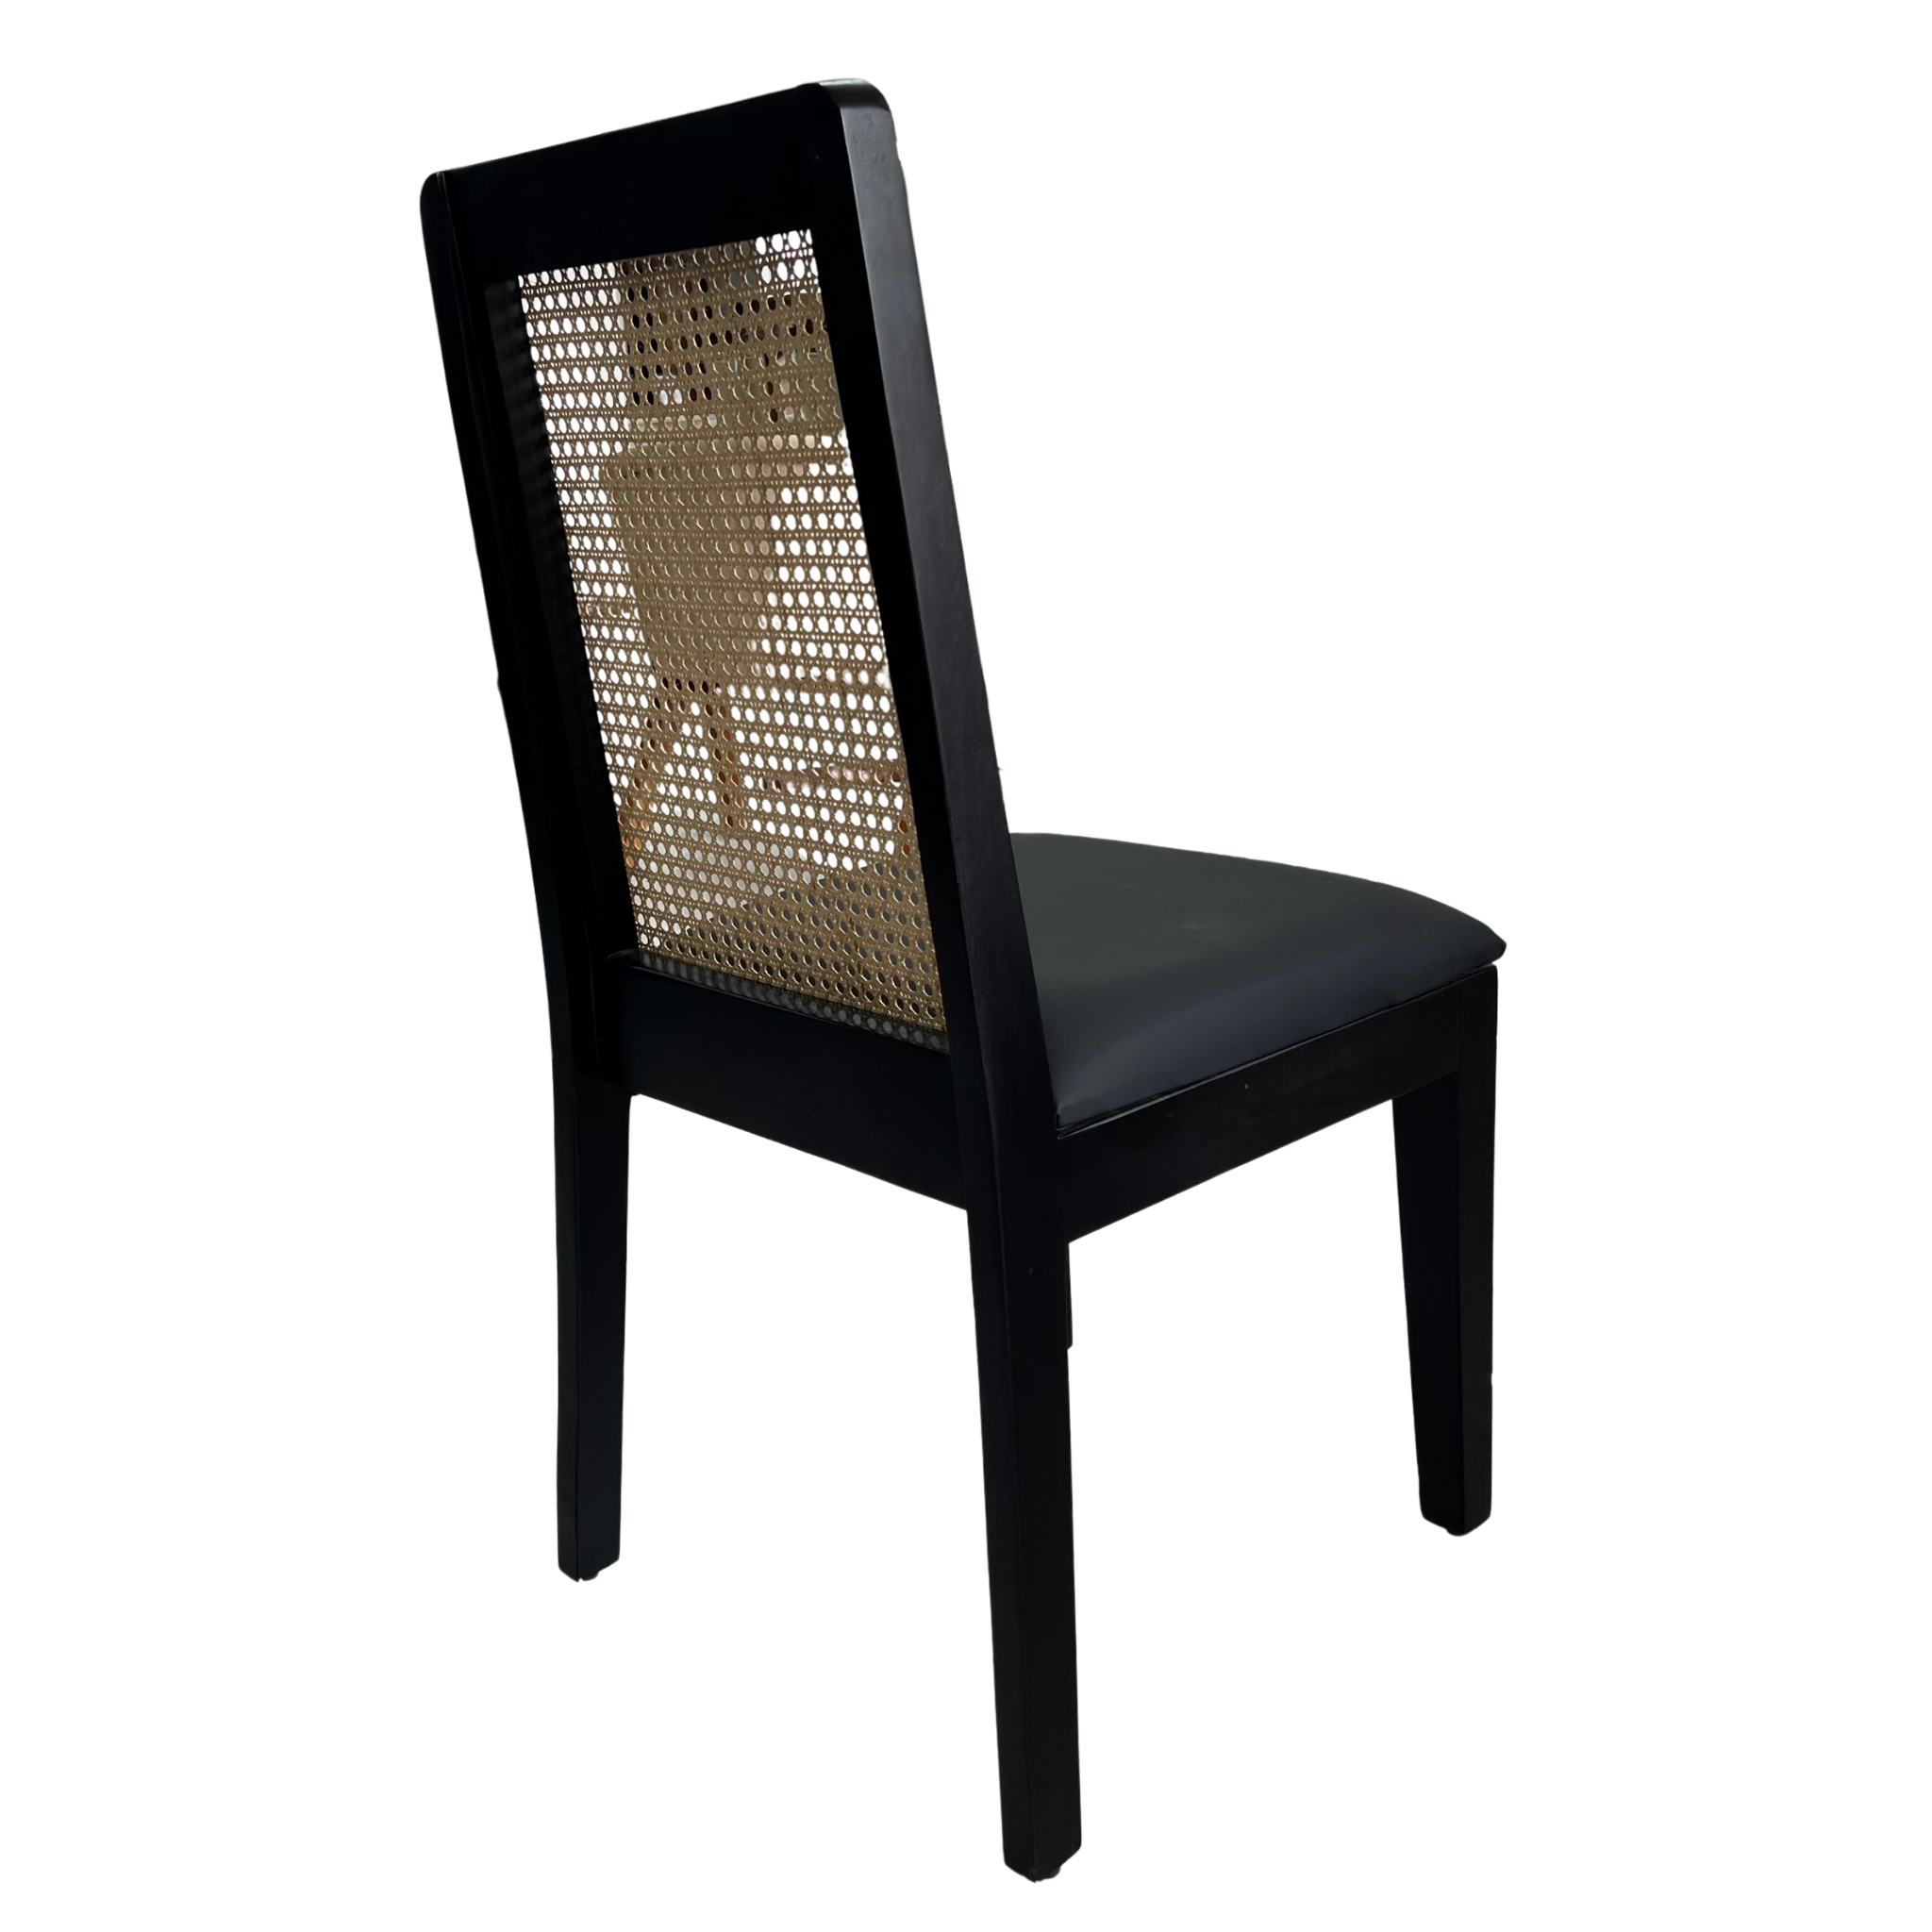 Altana Black Cane Chair